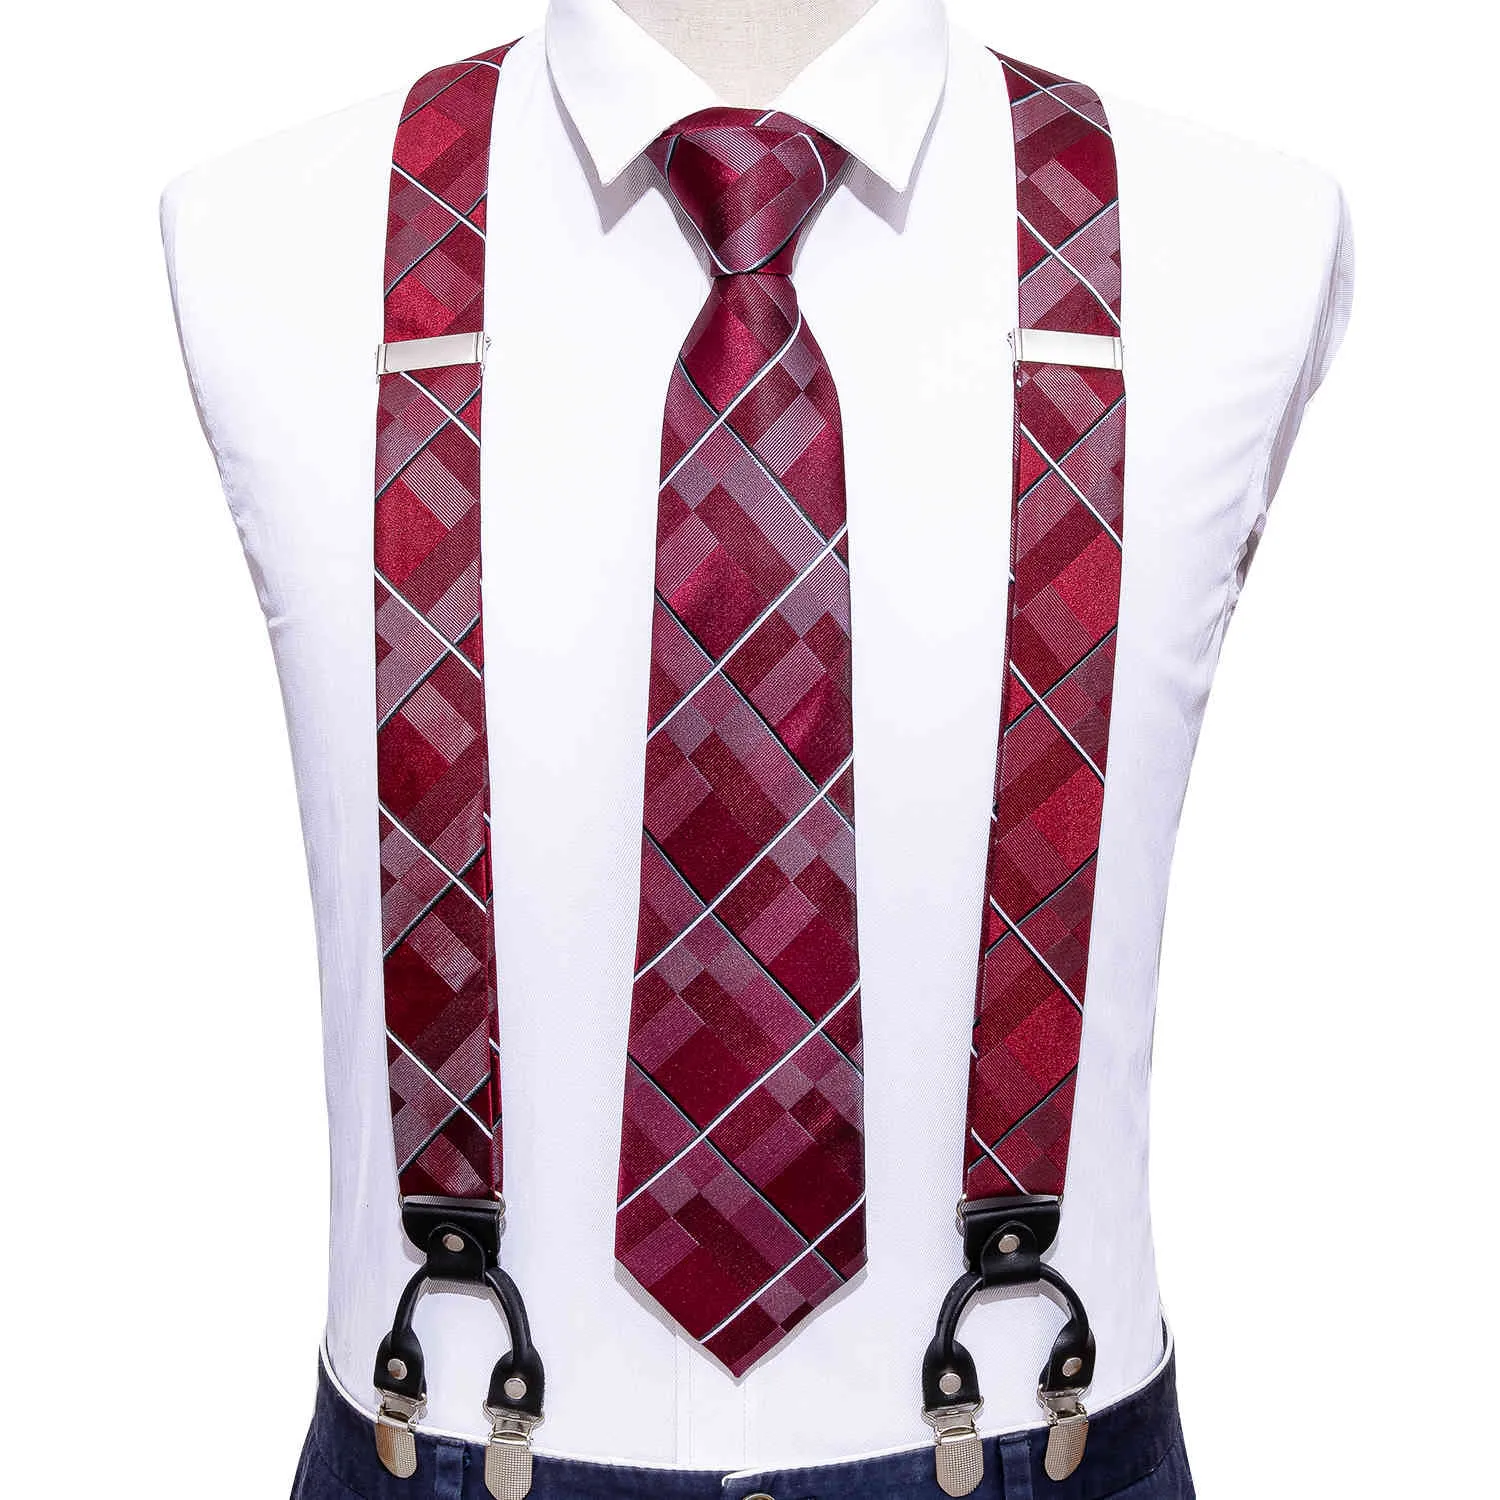 Red Fashion Novità Regolabile Y-Back Set cravatta in seta uomo Party Wedding Y-Shape 6 Bretelle con clip BarryWang